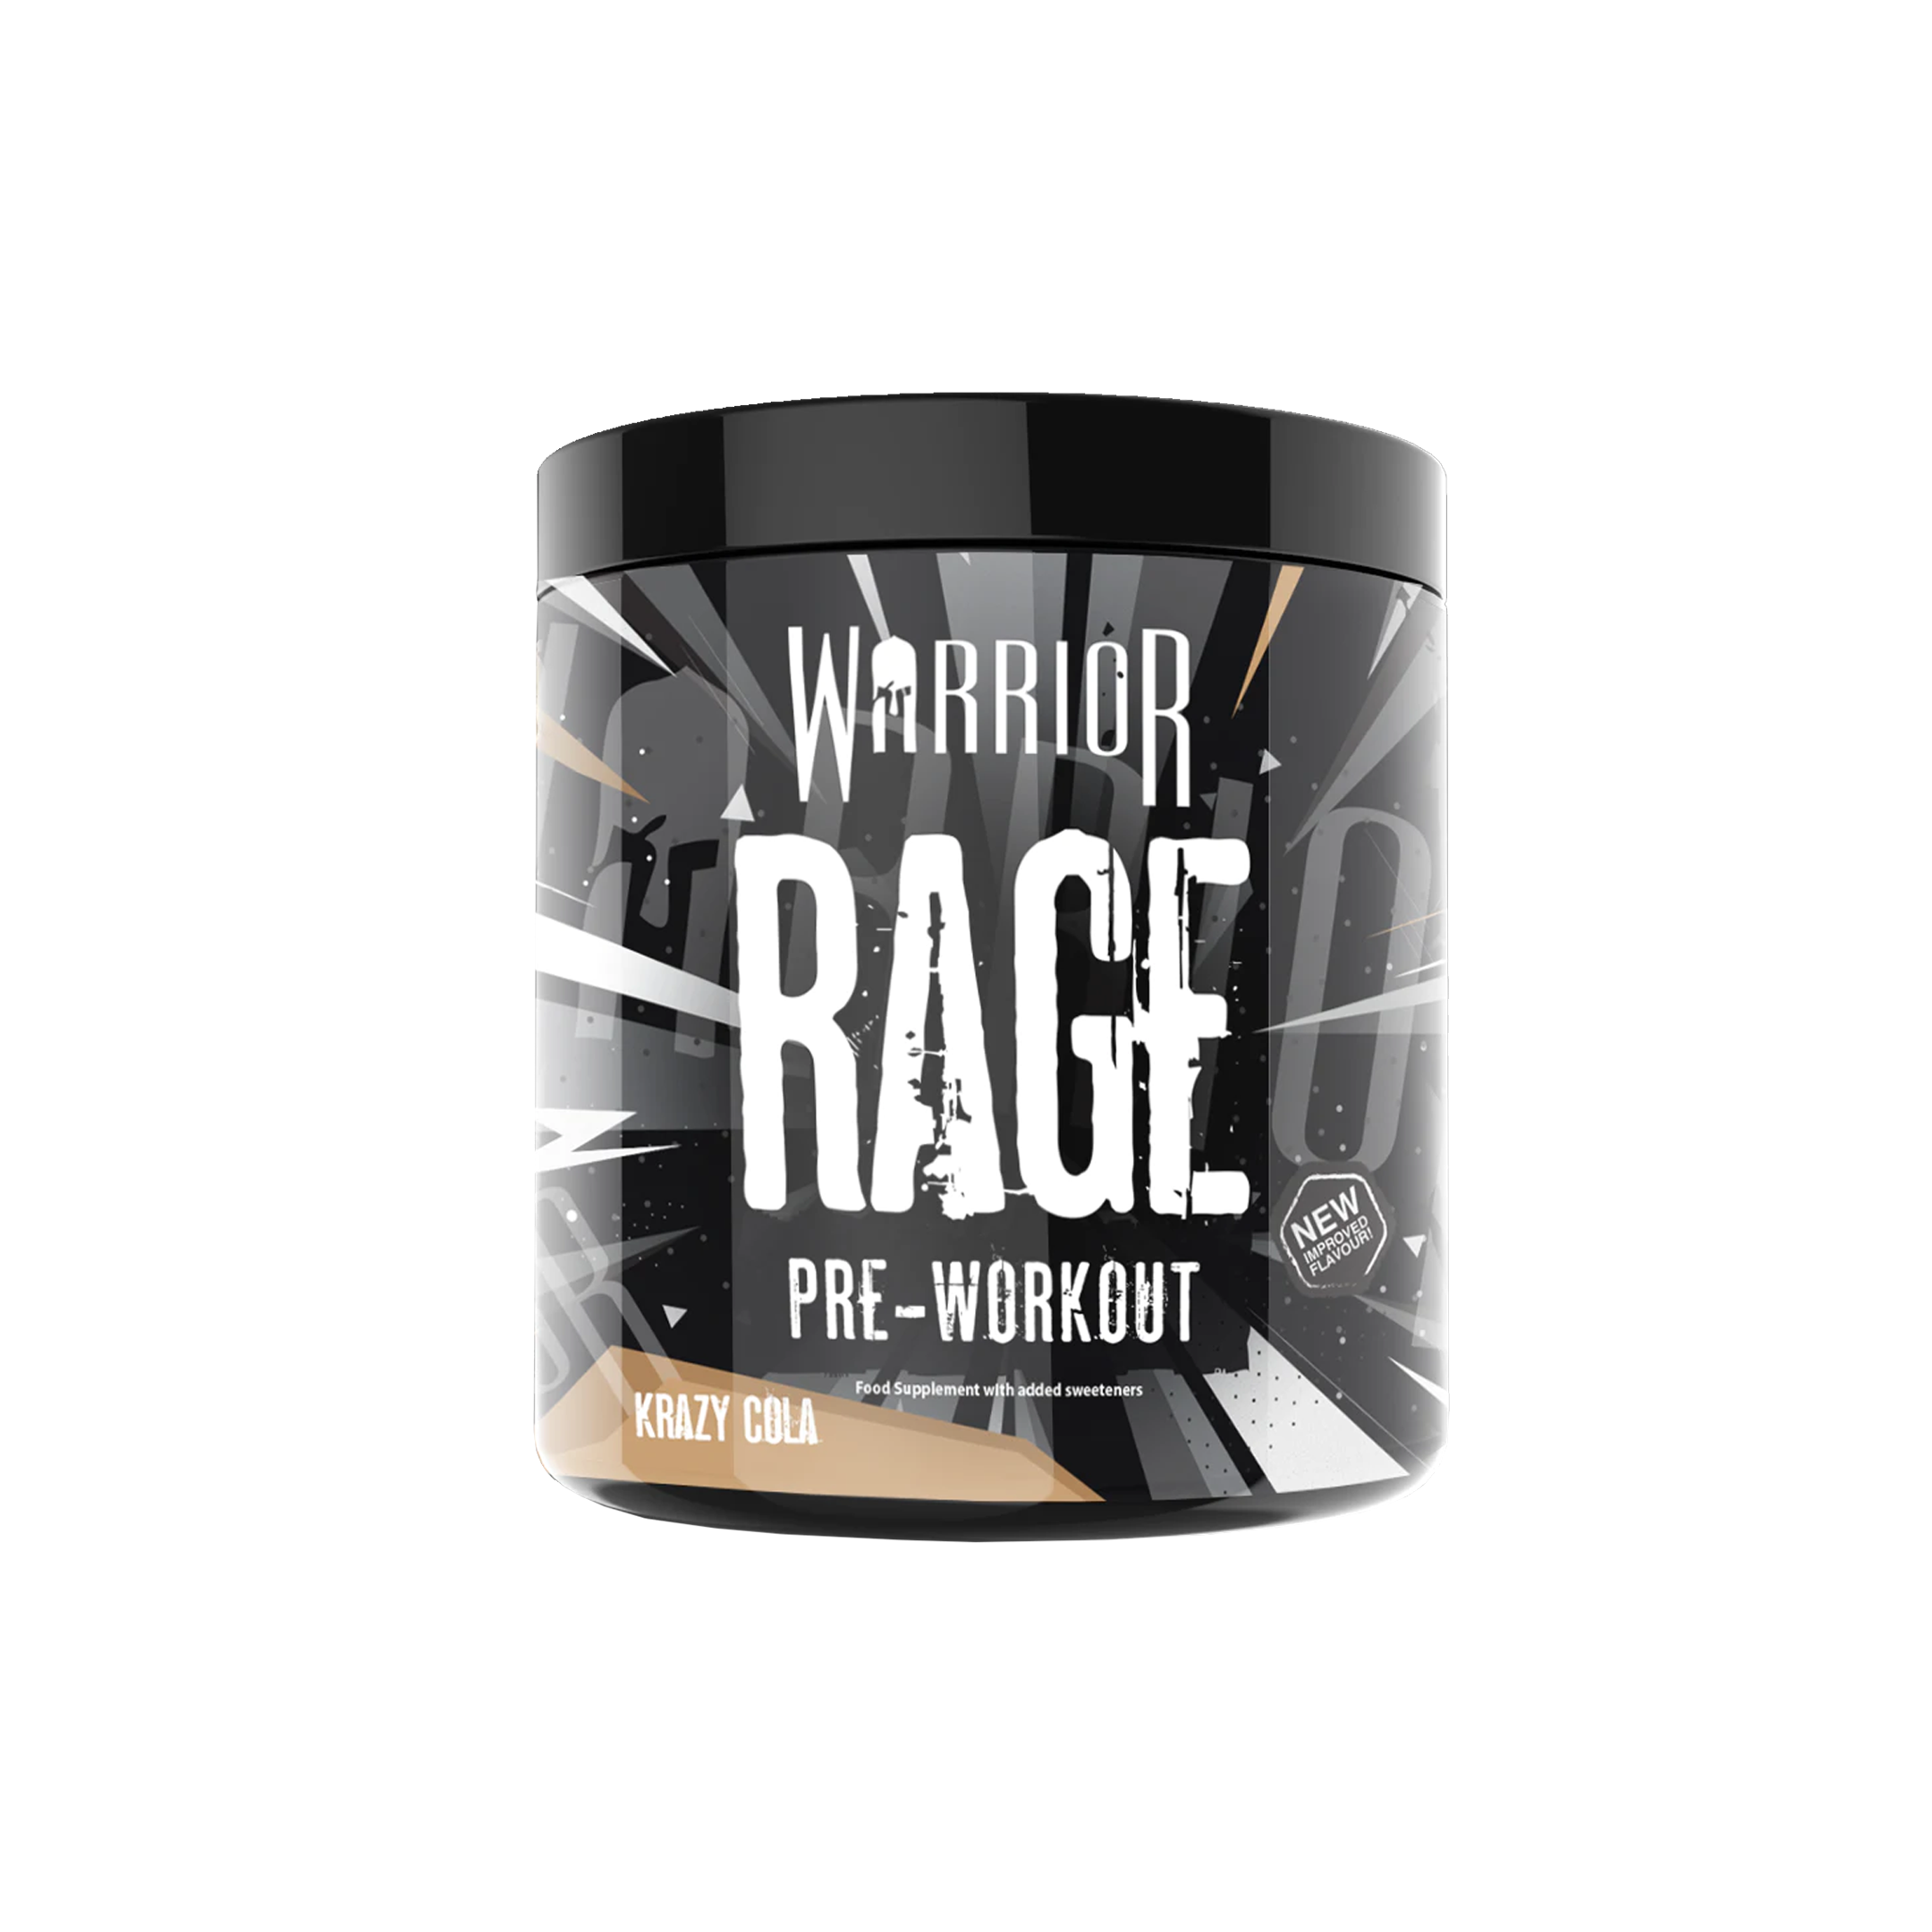 Warrior, Rage - Pre-workout - 45 Servings